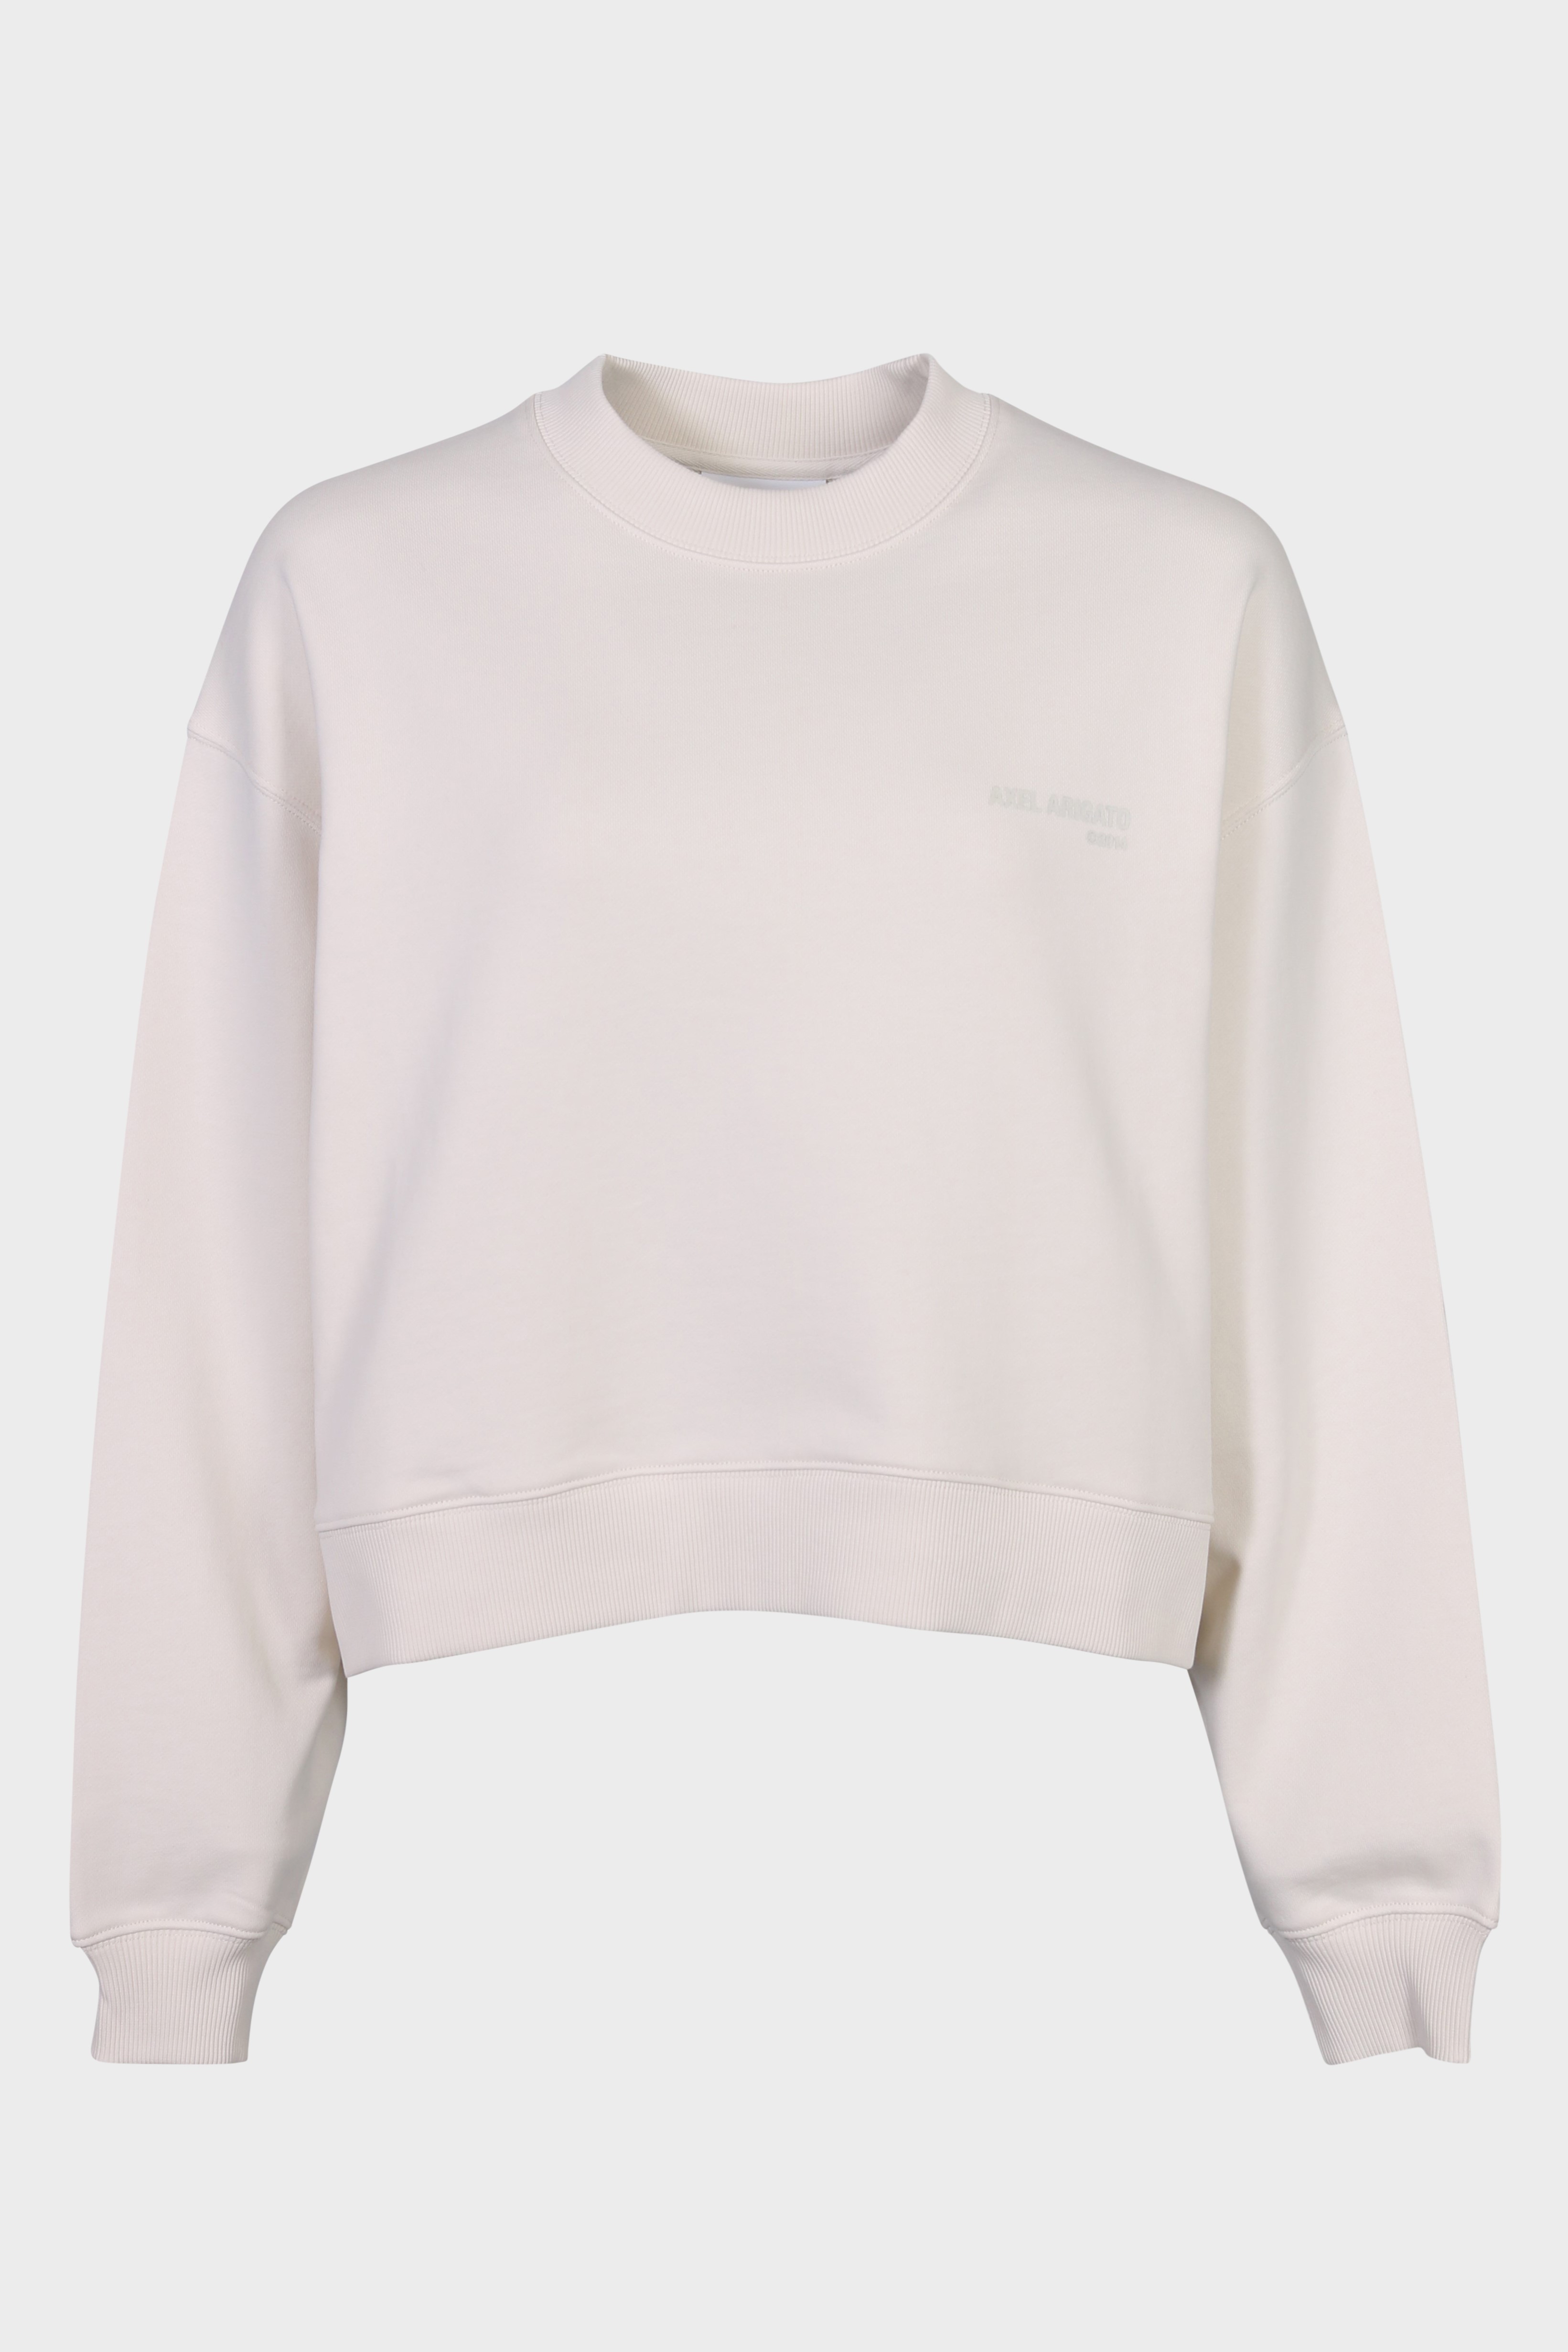 AXEL ARIGATO Legacy Sweatshirt in Off White L